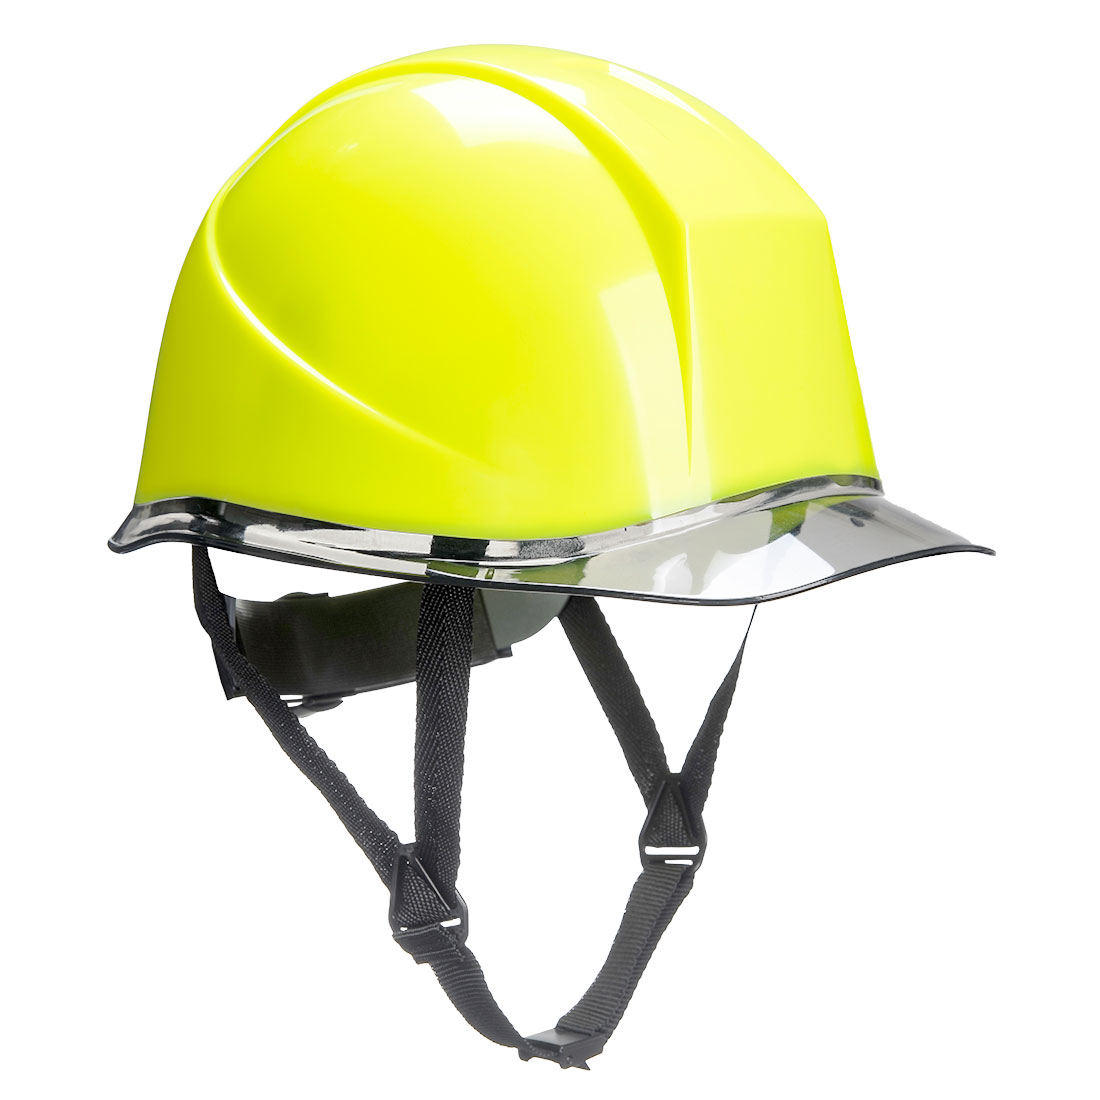 Skyview Safety Helmet